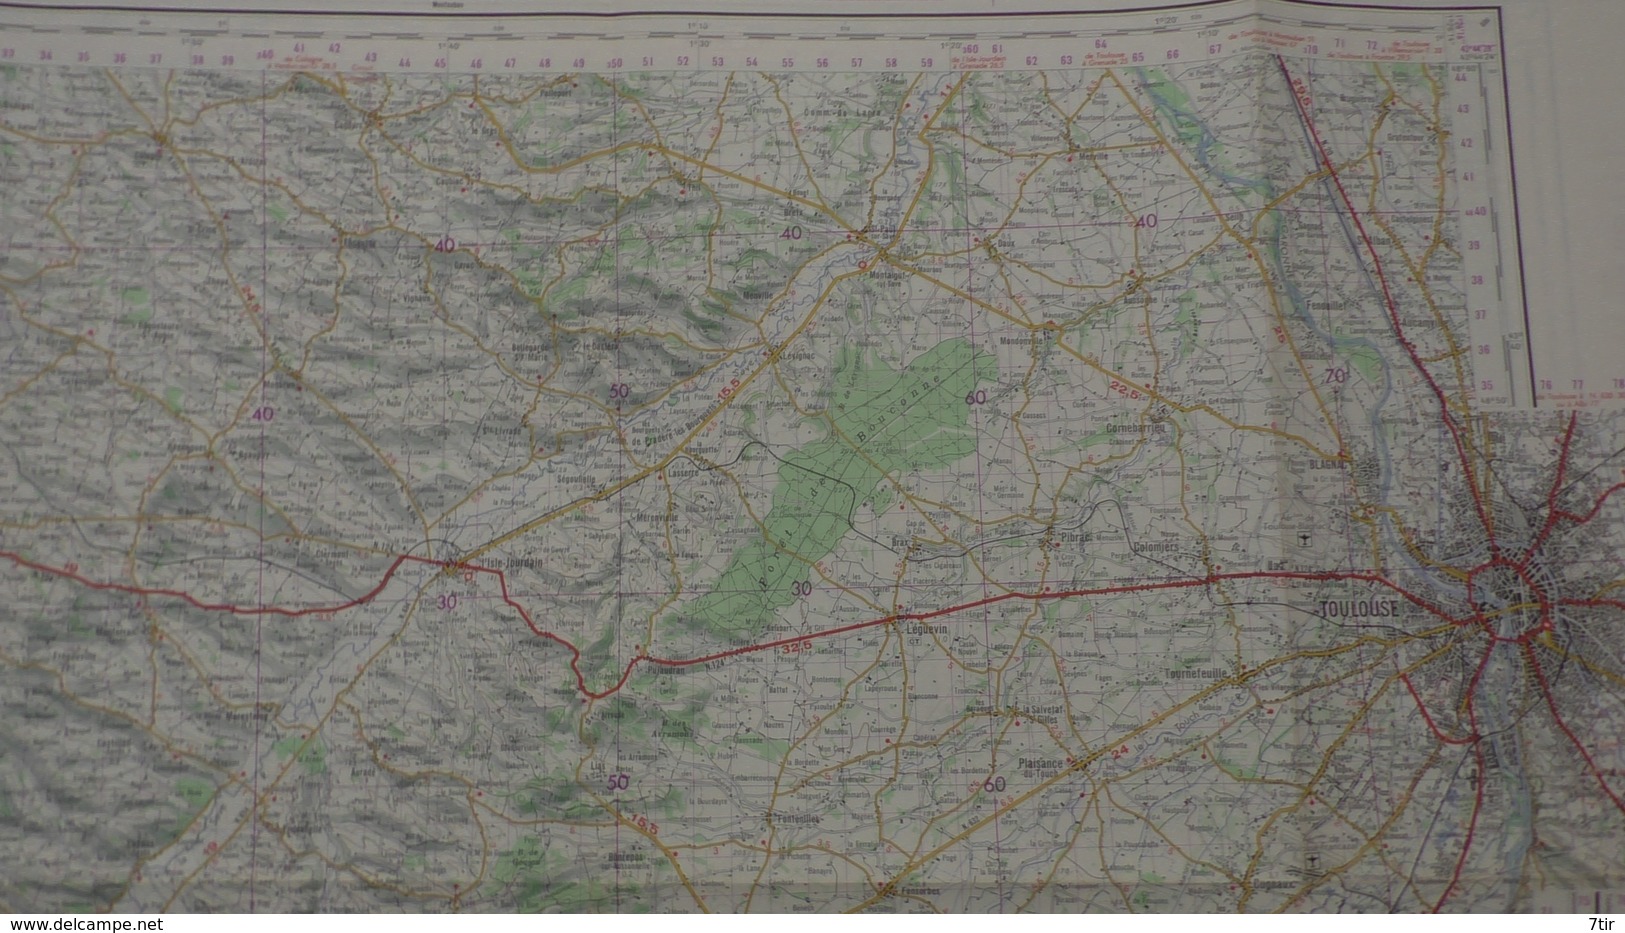 TOULOUSE MURET MAUVEZIN GIMONT L'ISLE JOURDAIN SAMATAN LOMBEZPIBRAC CORNEBARRIEU T LYSLEGUEVIN BLAGNAC - Geographical Maps